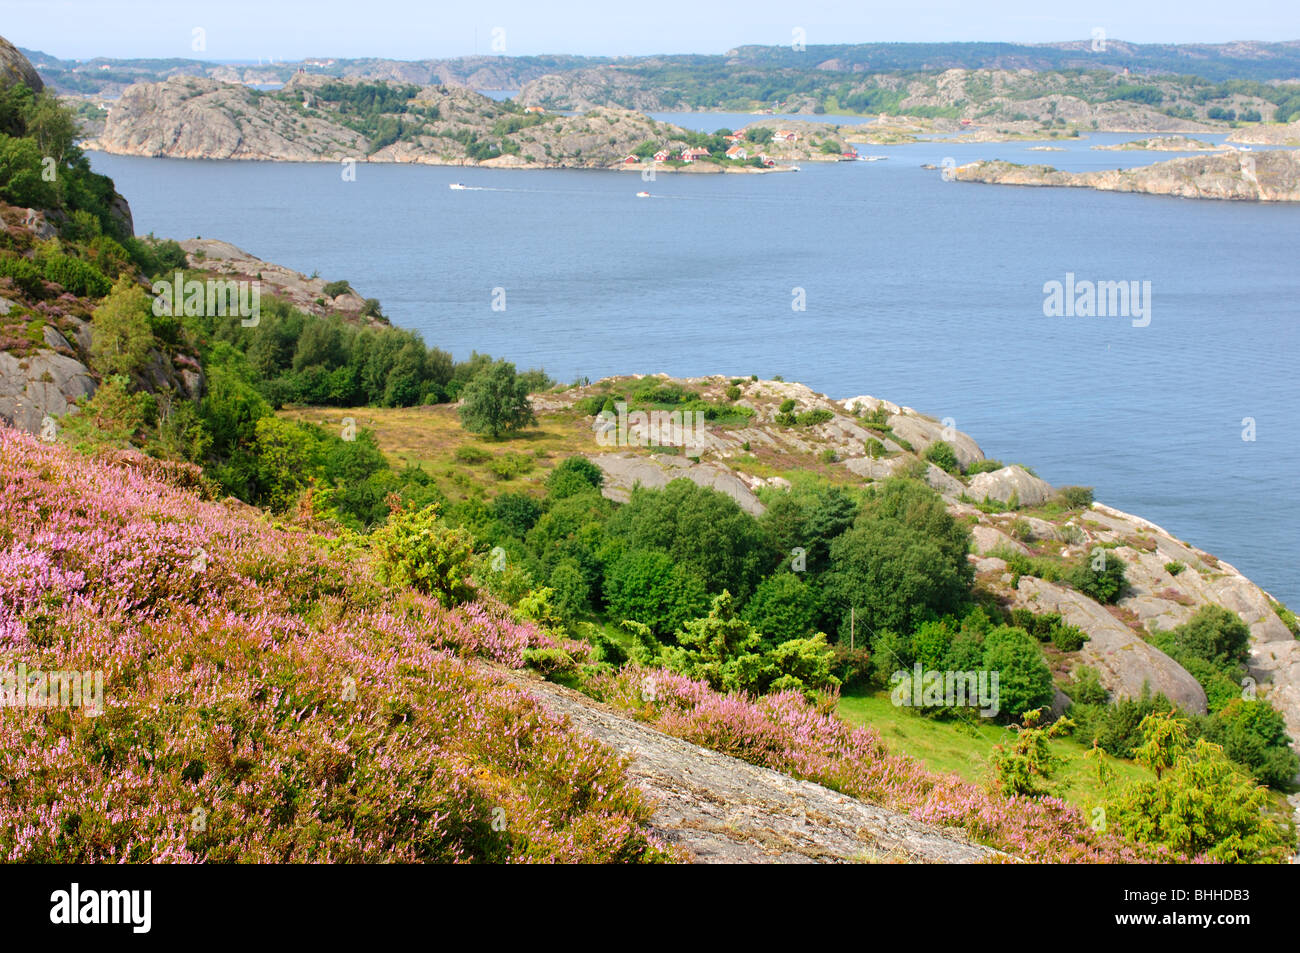 A view over archipelago, Sweden. Stock Photo